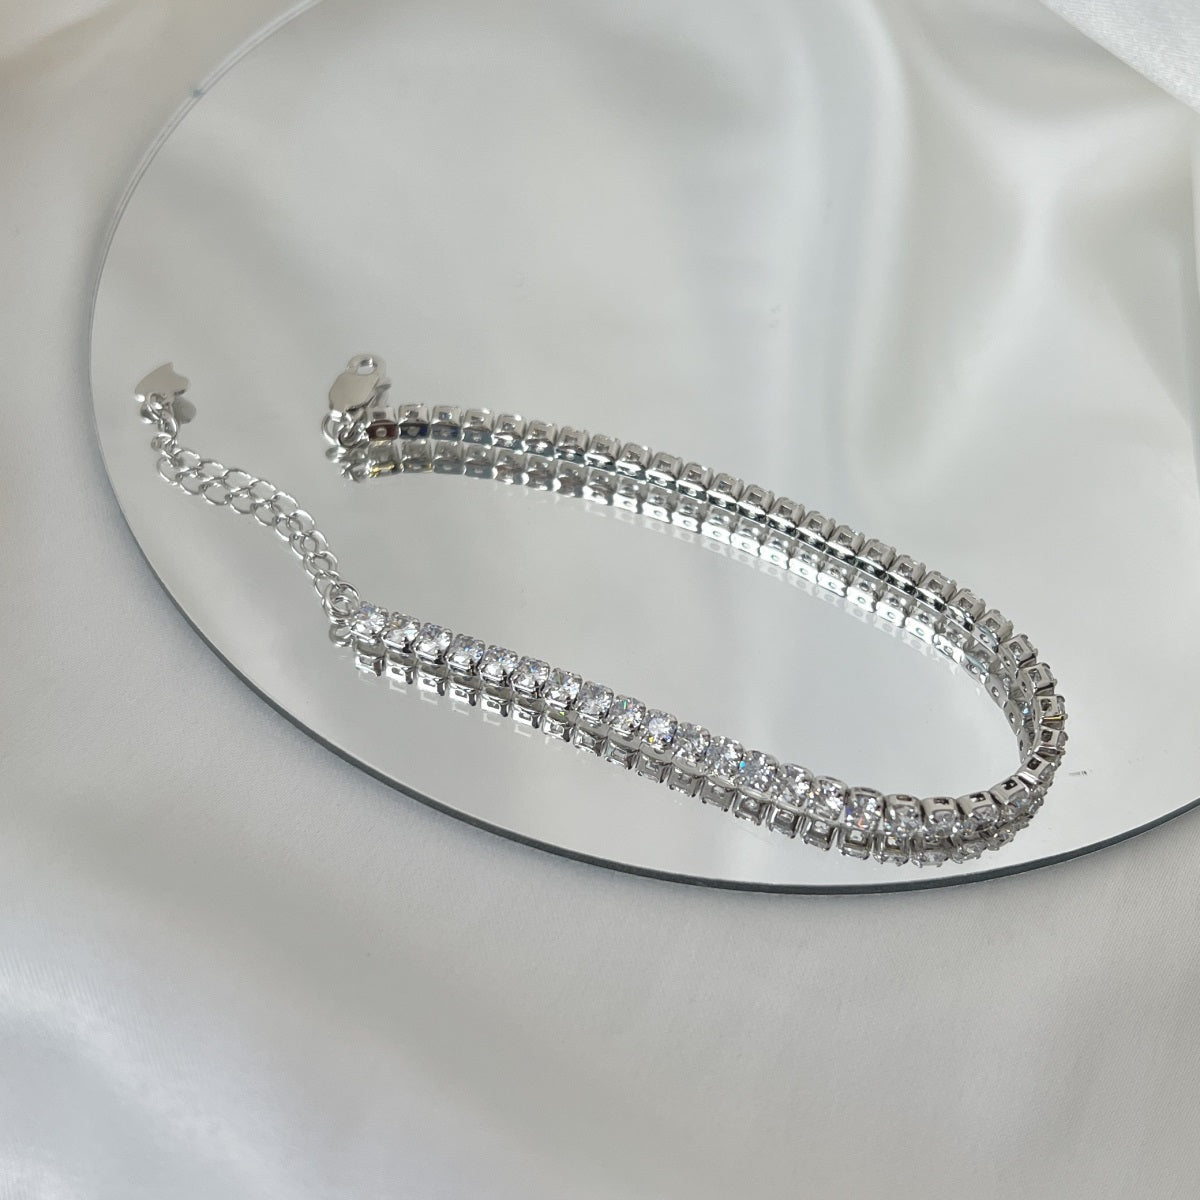 Women's Tennis Bracelet 925 Silver With Zircons - Jewelry - EM Accessories - 925 silver - new - SILVER-0022-16+-BRC